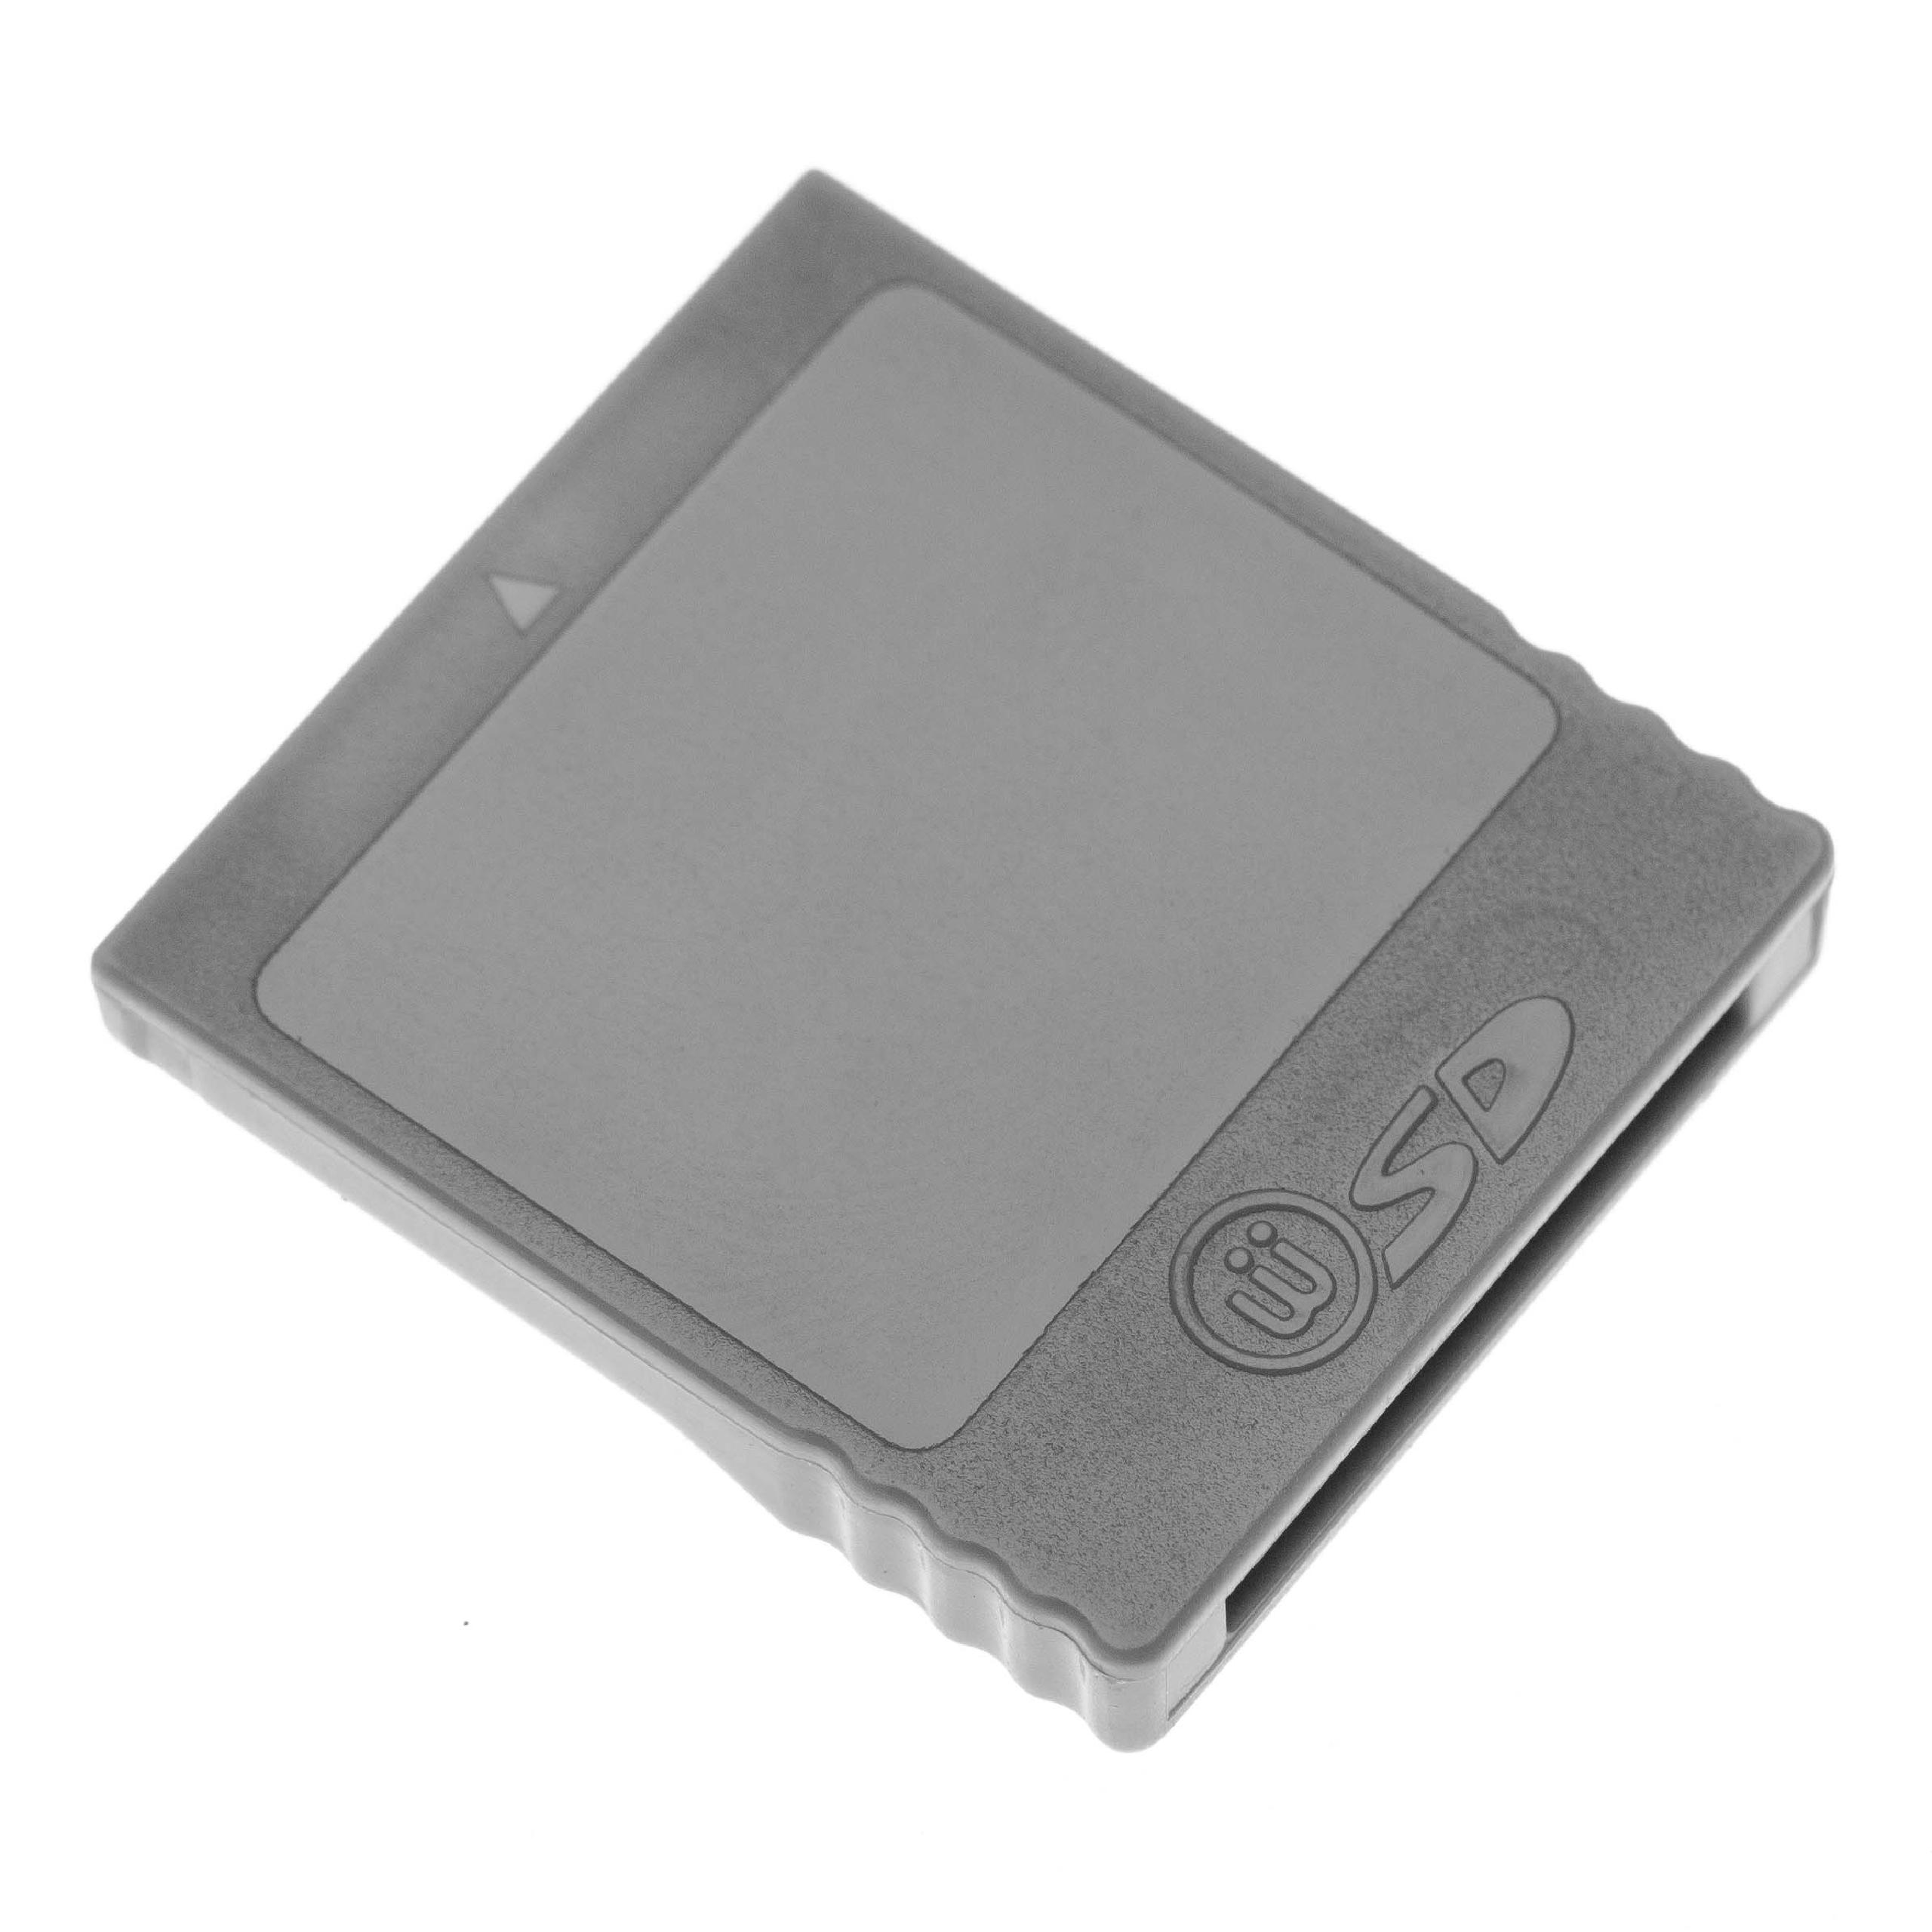 Adaptateur de carte SD pour console de jeu Nintendo GameCube, Wii - Convertisseur carte SD